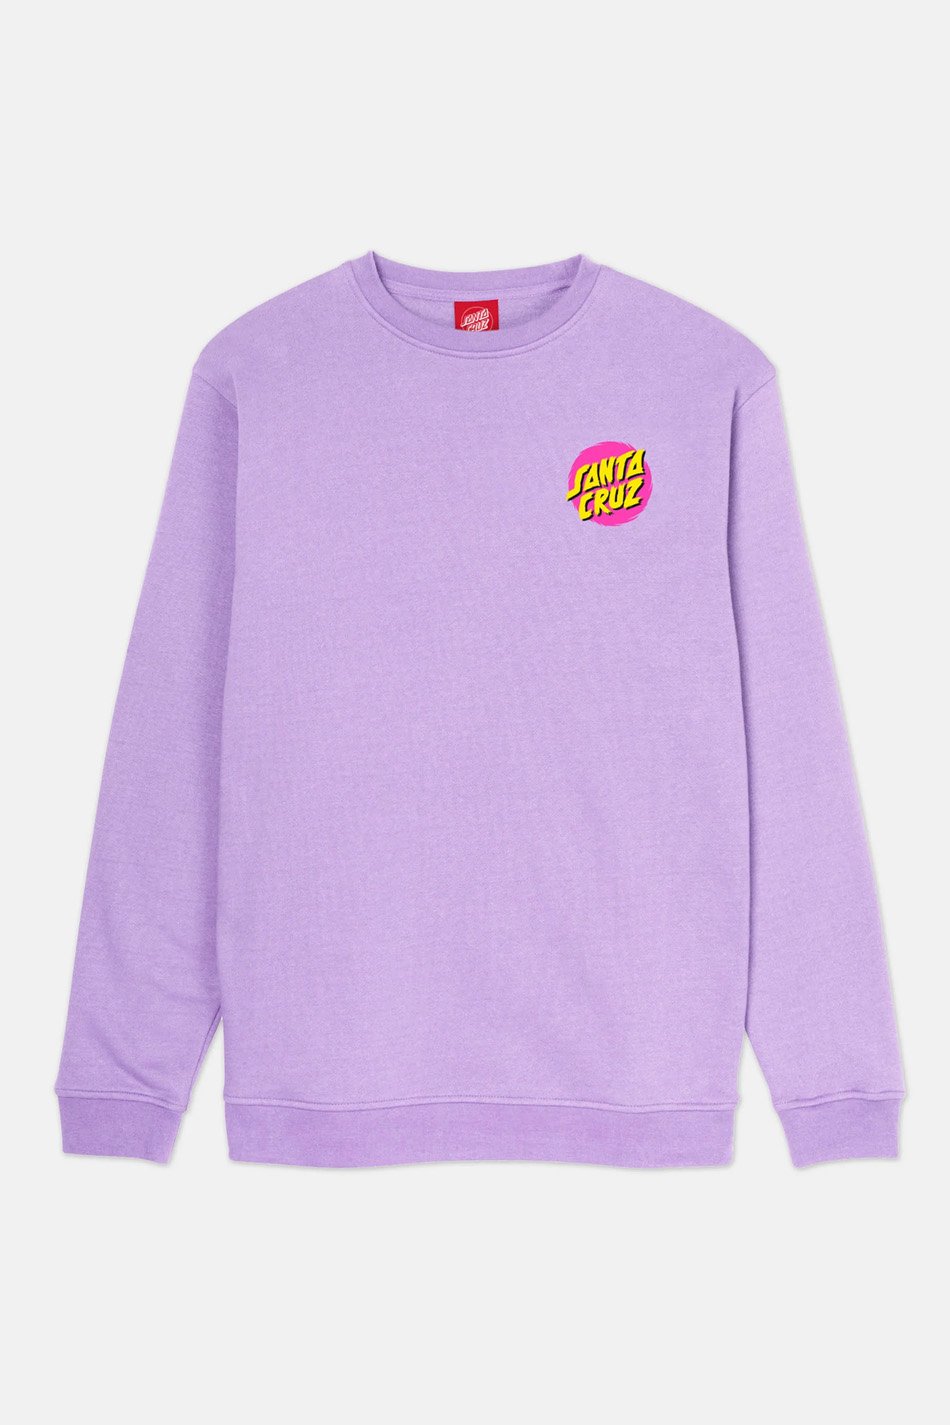 Santa Cruz Sweatshirt Style Dot Crew Digital Lavendel